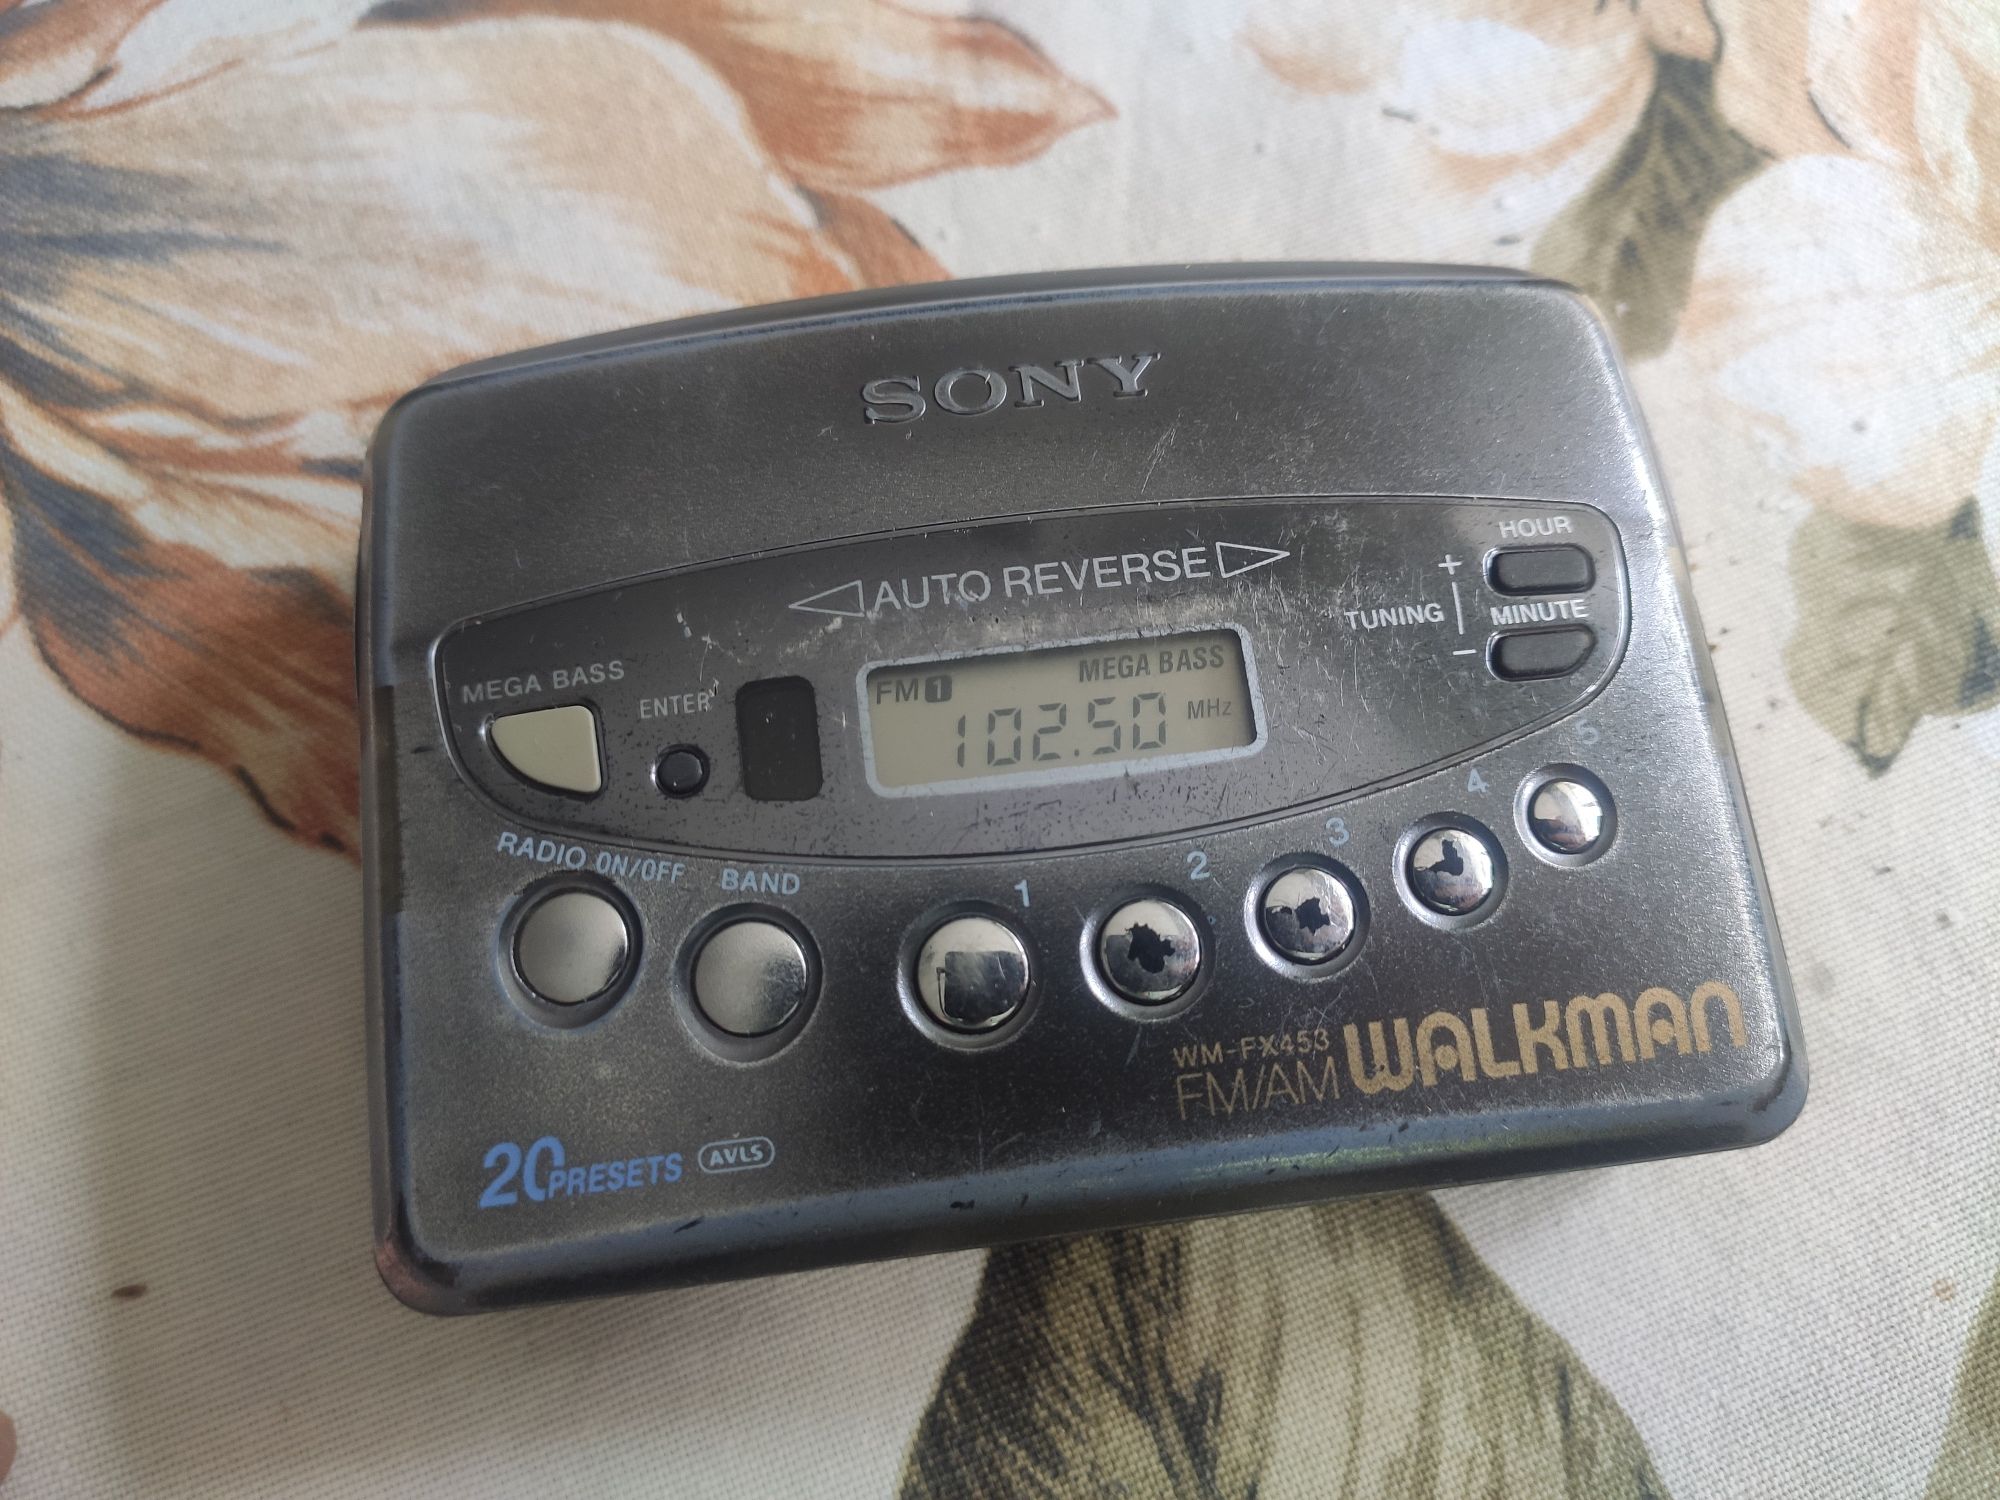 Sony WM-FX 453 Walkman AM/FM Кассетный плеер